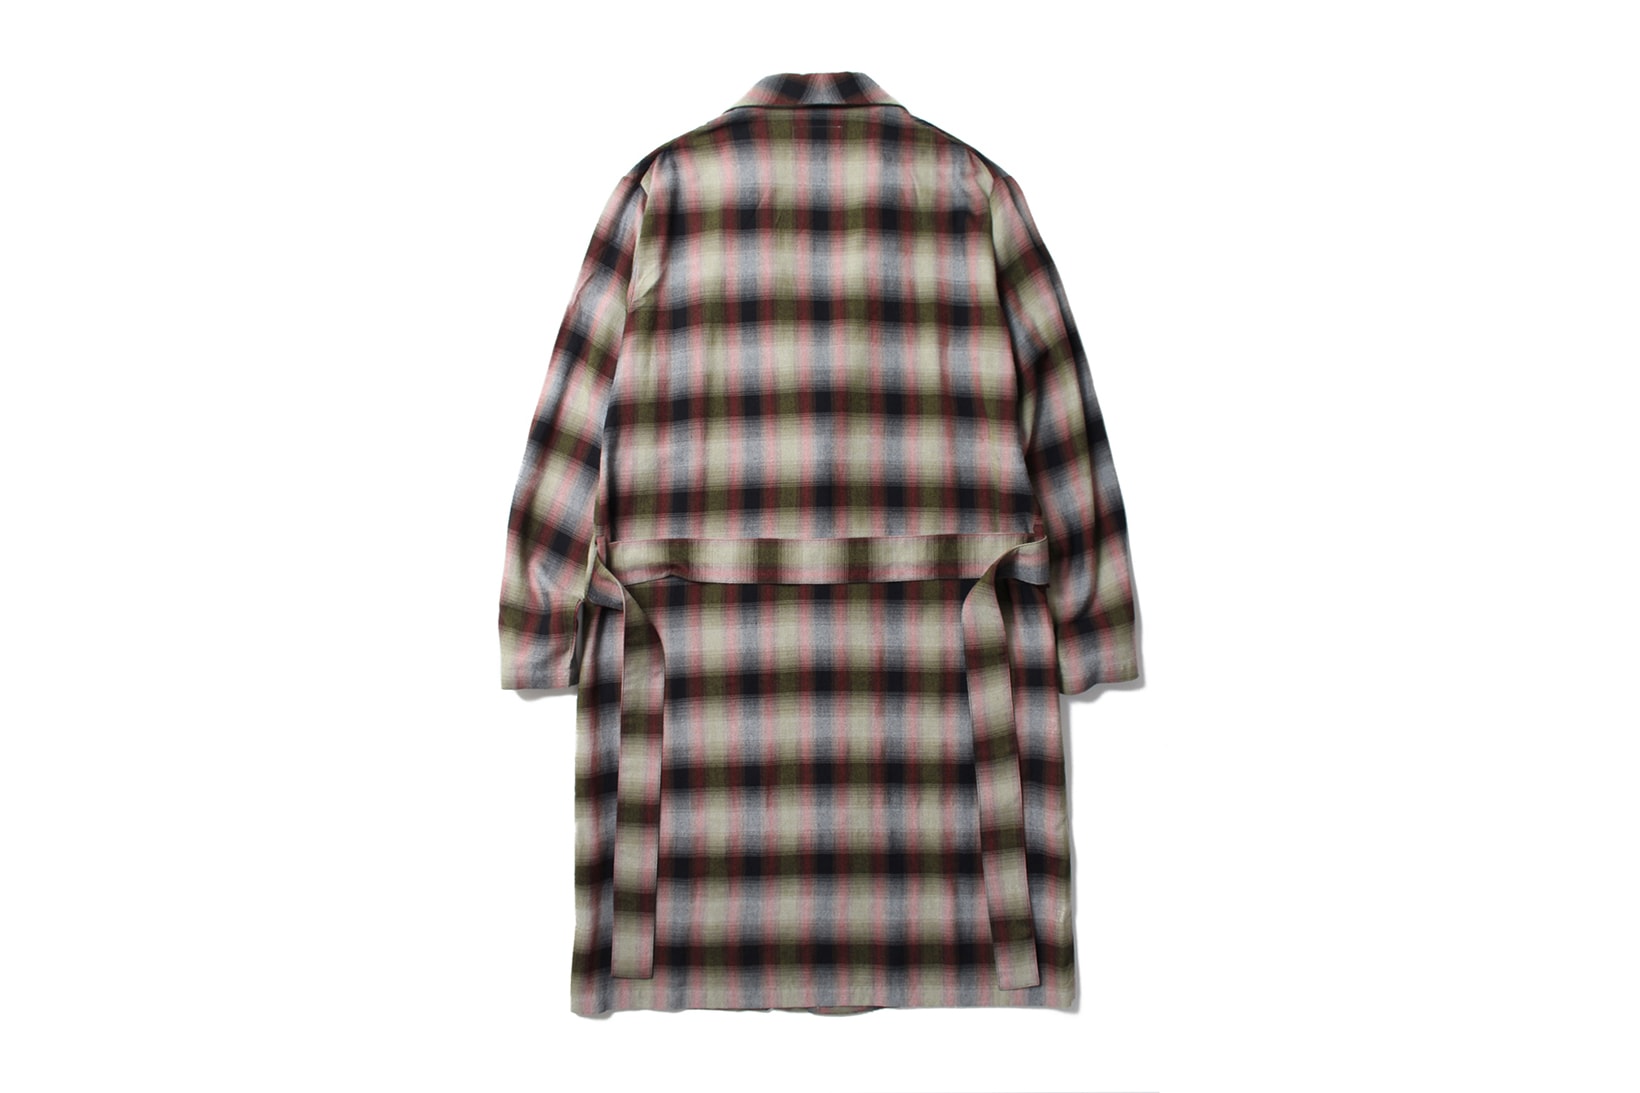 WACKO MARIA McGregor collaboration guilty parties japan outerwear Lanificio Luigi Zanieri leopard print jacket coat lining Paradise Tokyo 2017 November 11 release date drop info